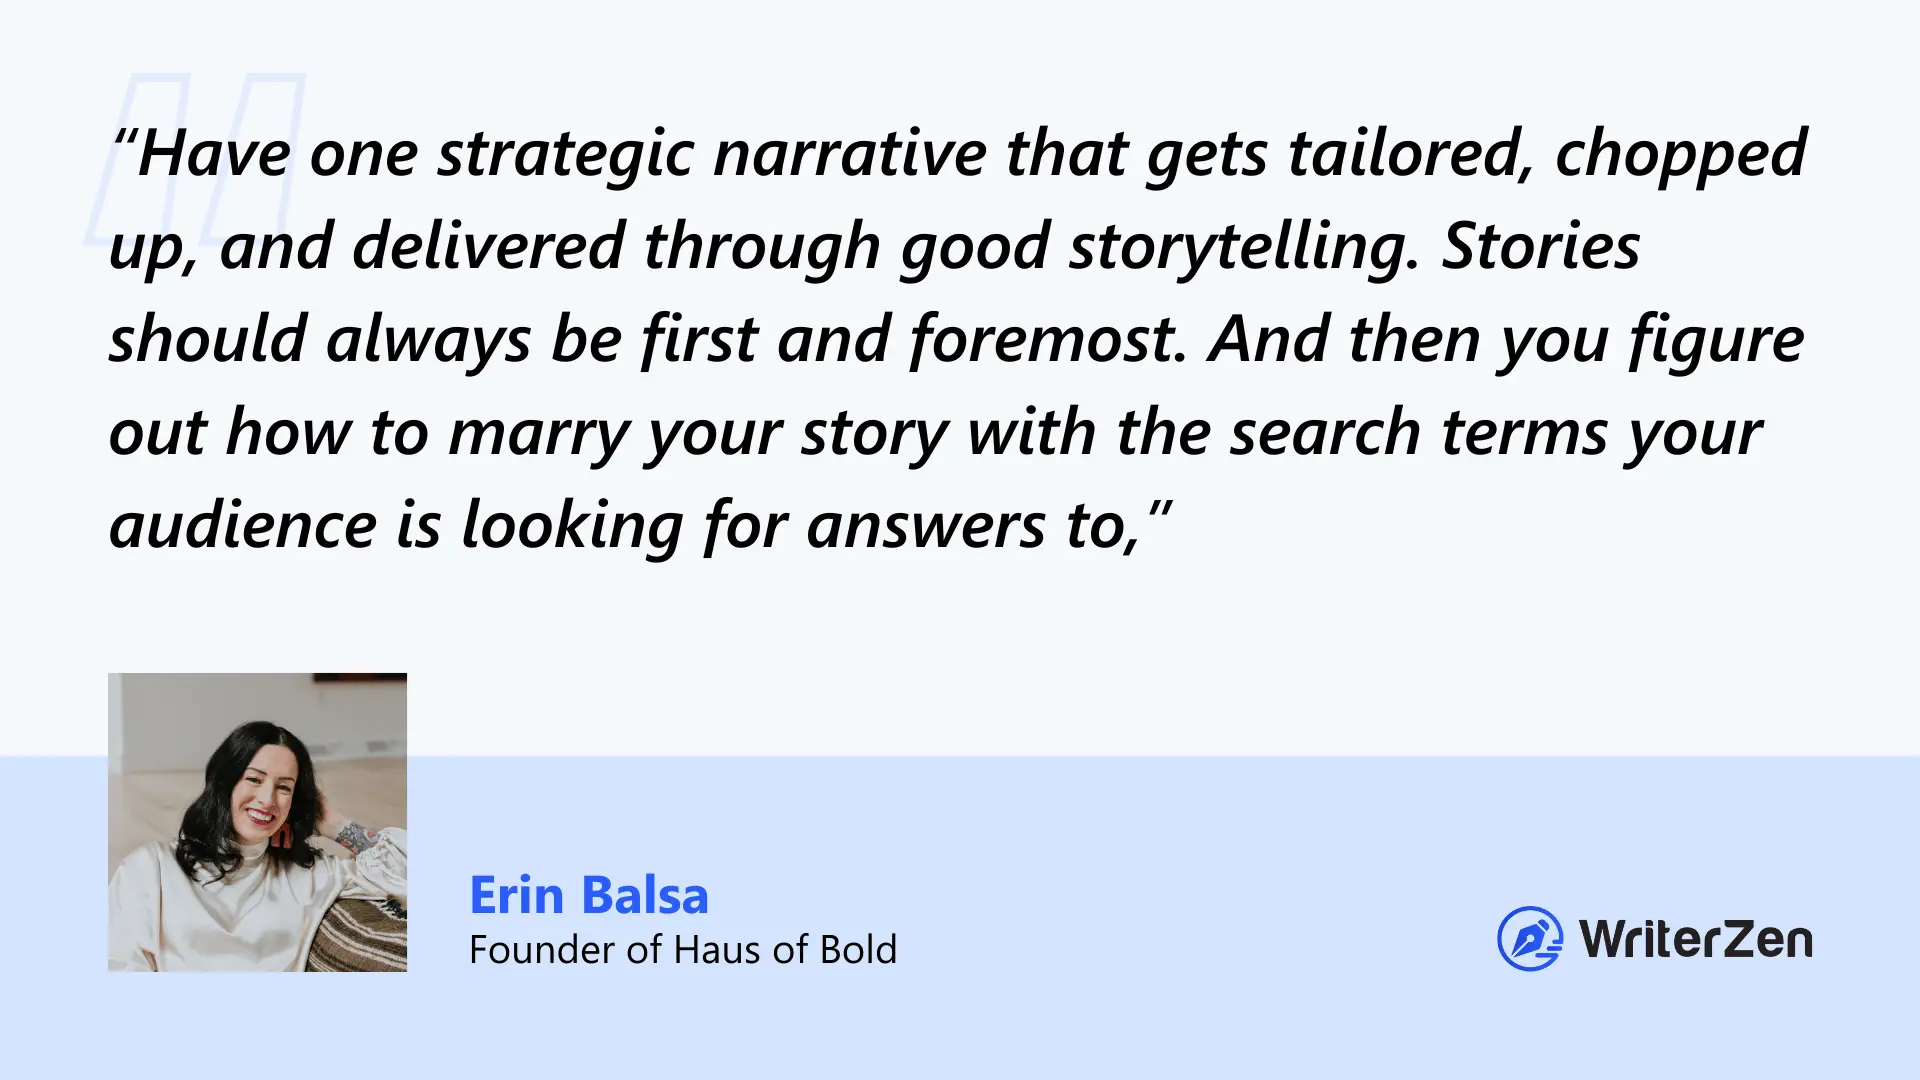 Erin Balsa's Take on Strategic Narrative